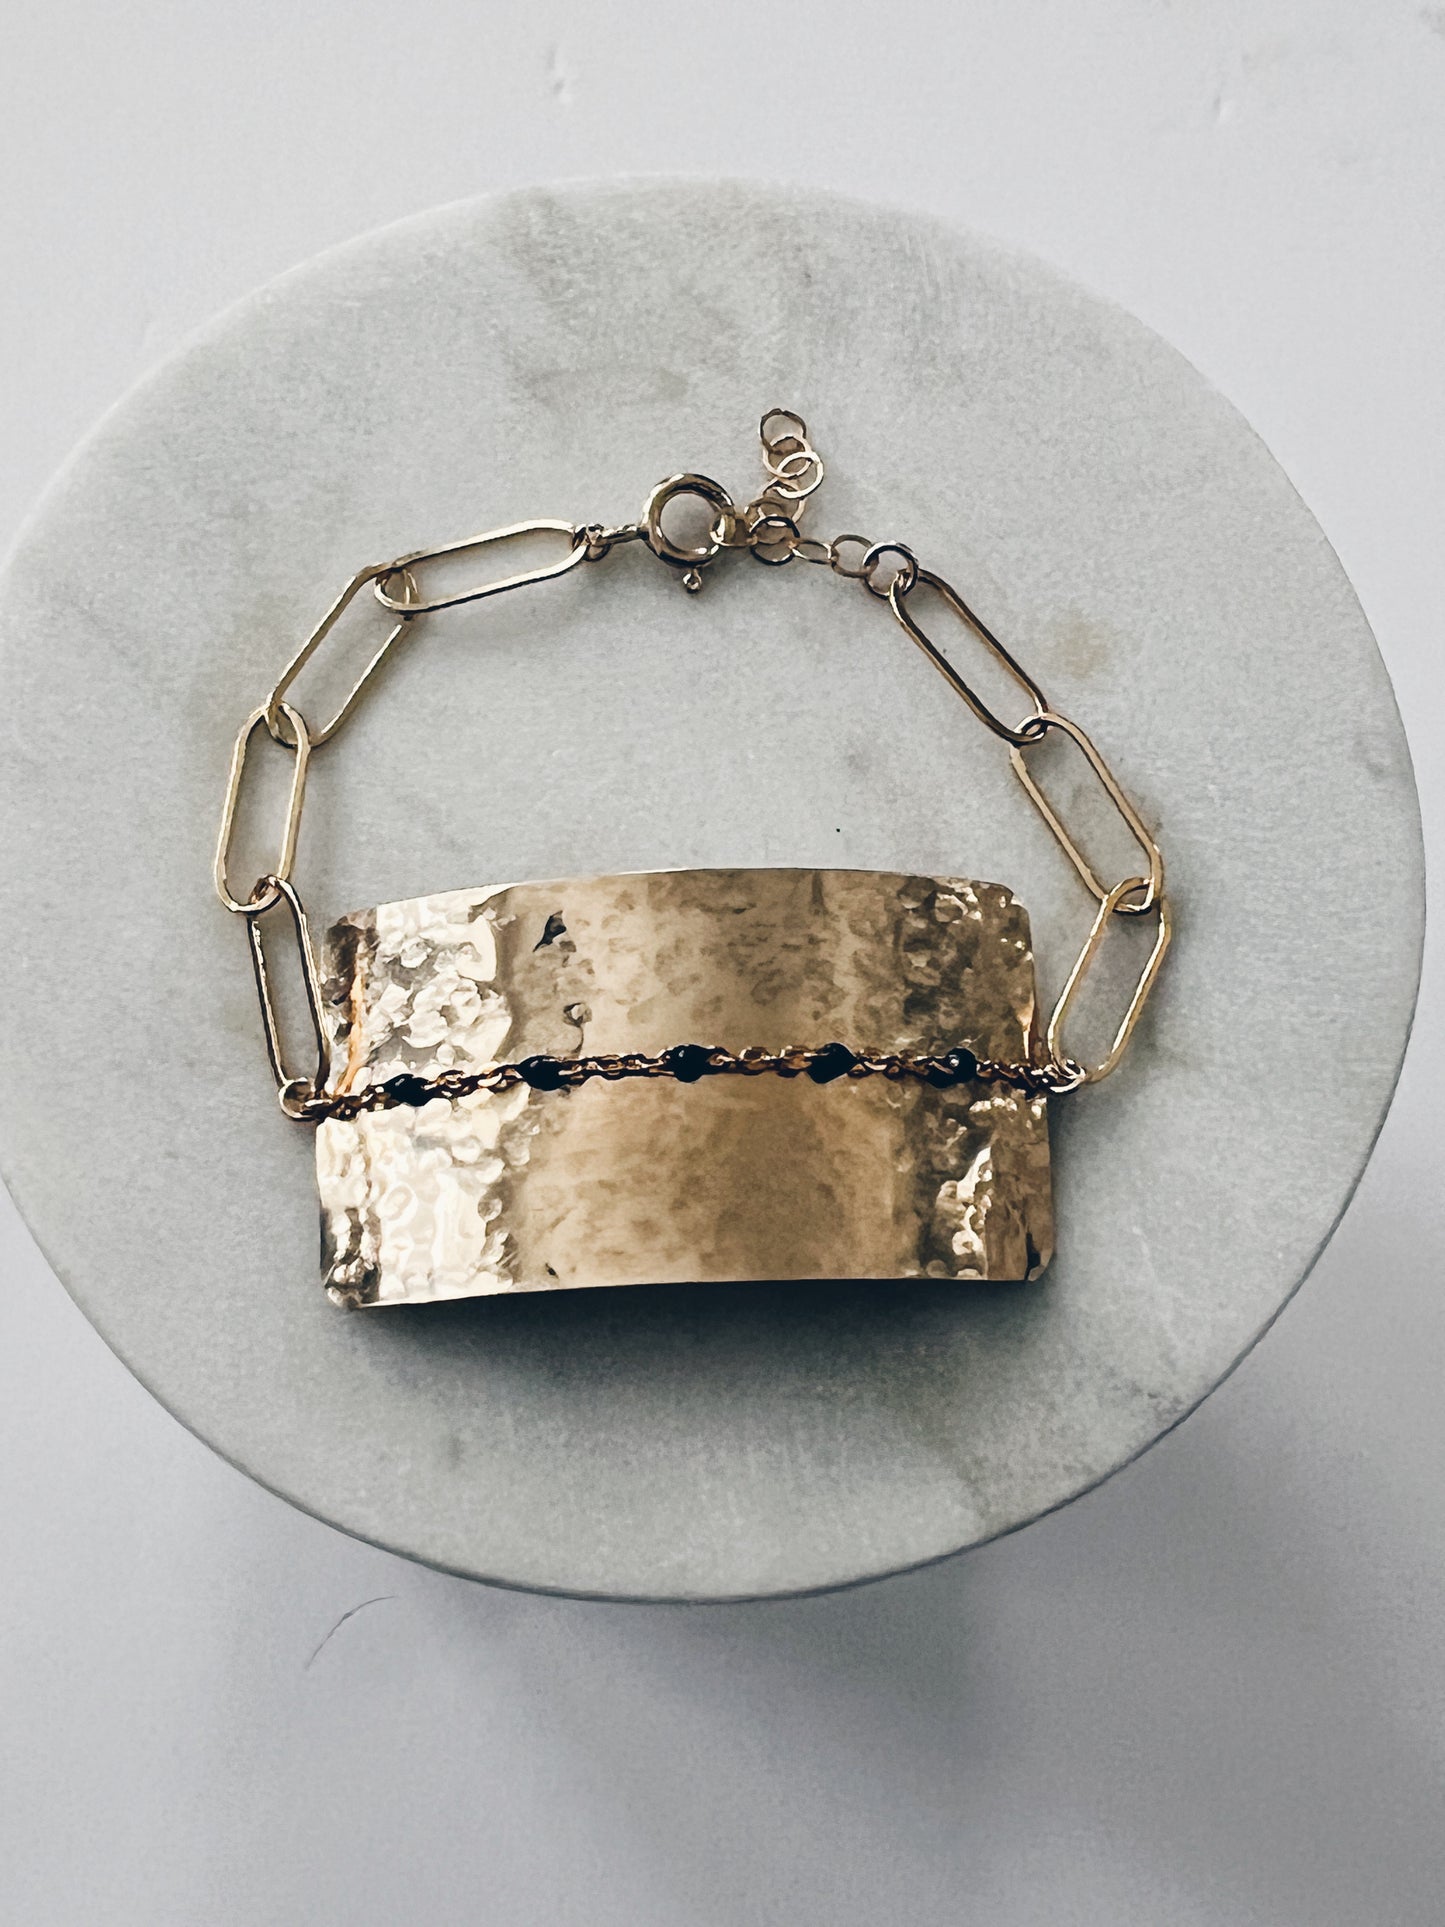 14k Gold Filled Aspen Cuff Bracelet